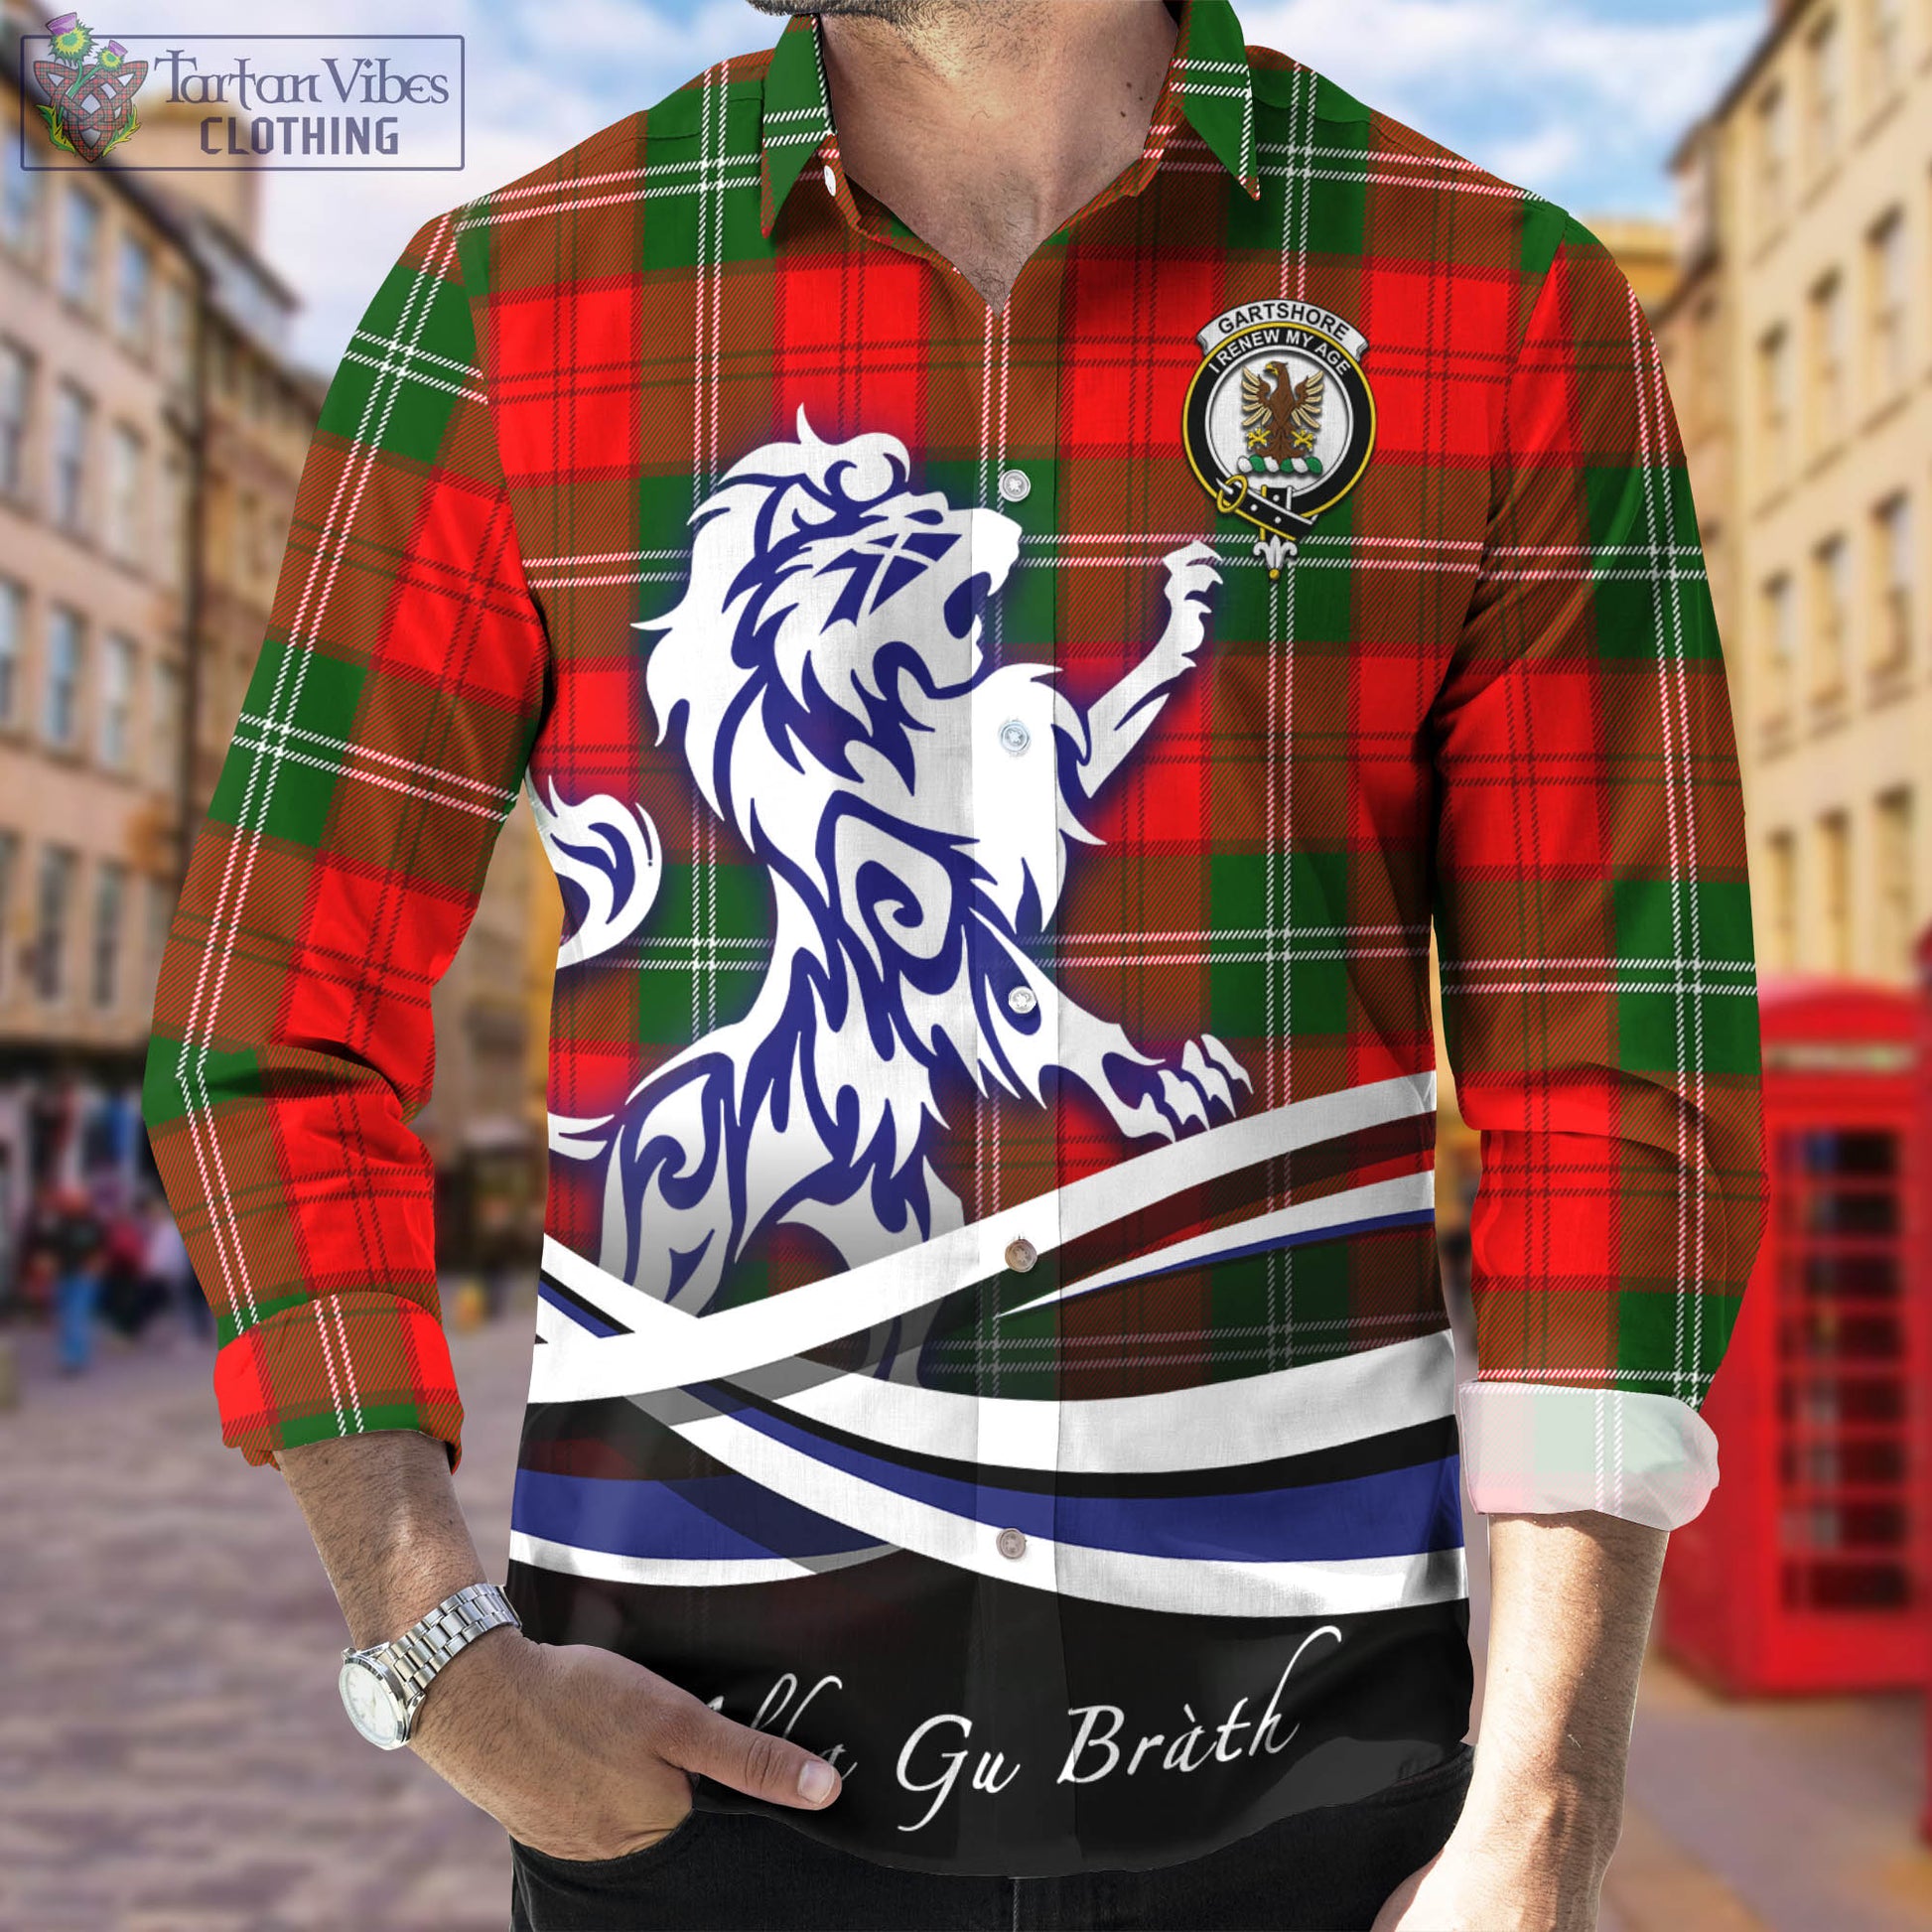 gartshore-tartan-long-sleeve-button-up-shirt-with-alba-gu-brath-regal-lion-emblem